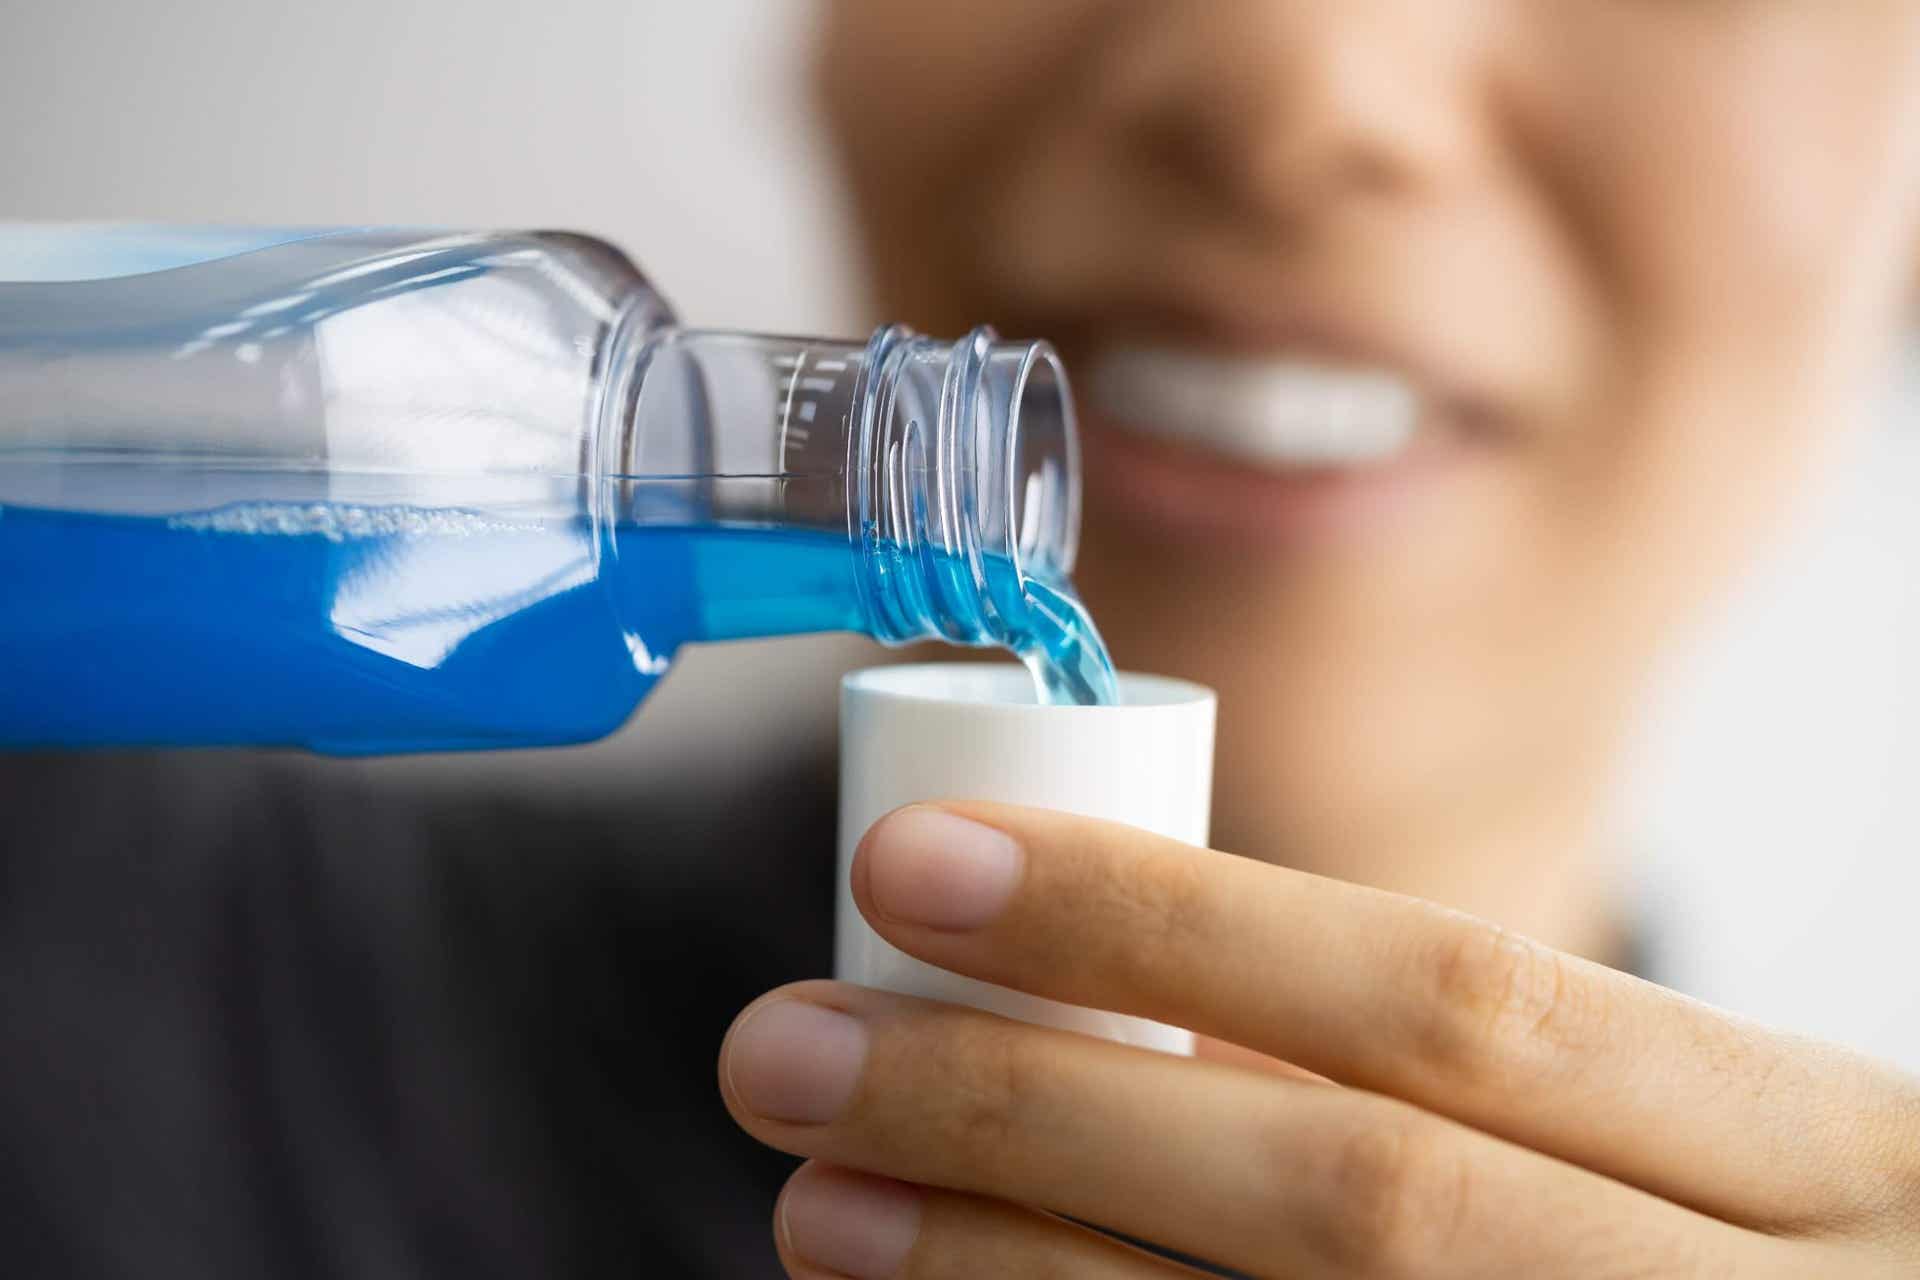 Enjuague bucal para limpiar el cepillo de dientes eléctrico.